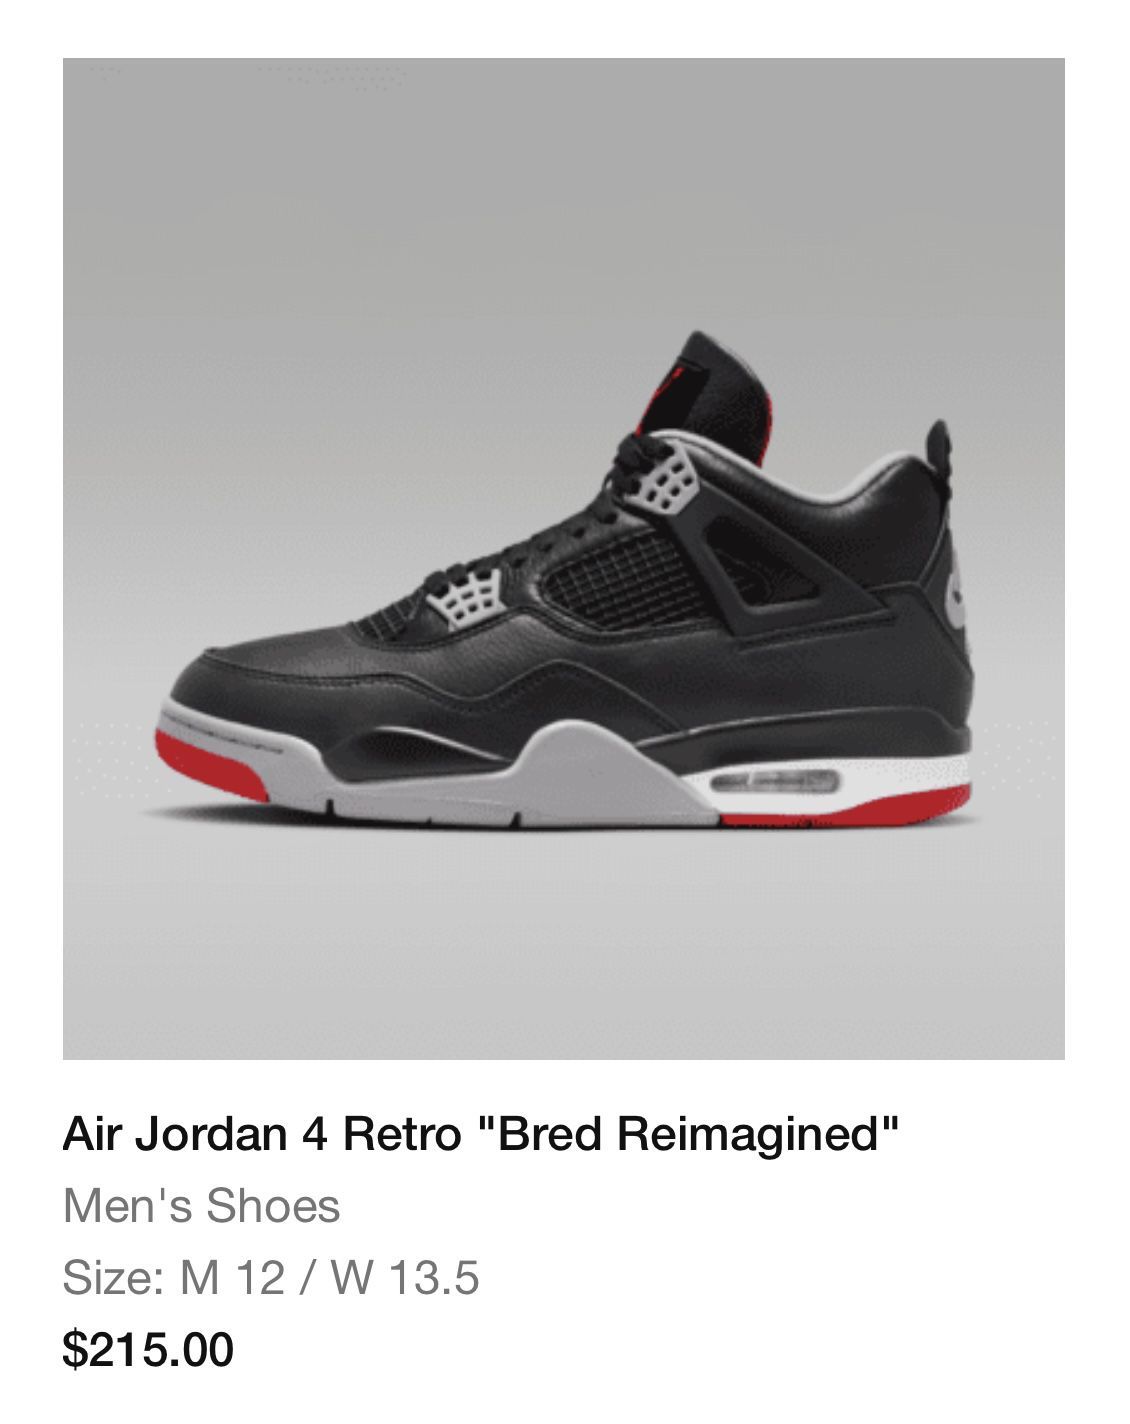 Jordan 4 Retro “Bred Reimagined” Size 12